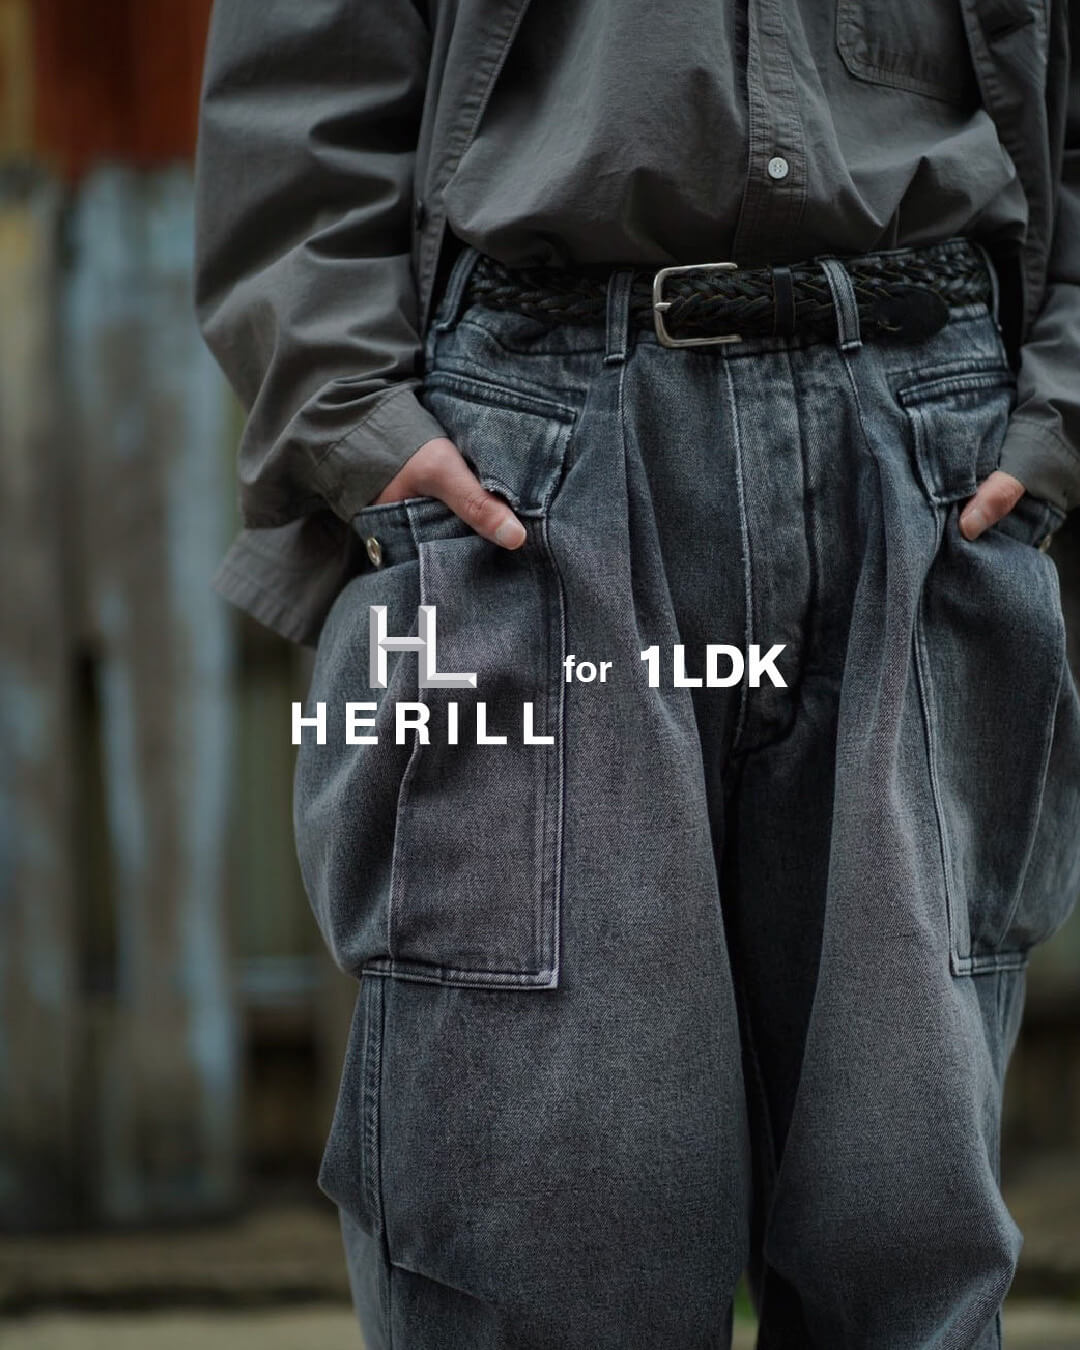 Herill 1LDK EX Denim Cargopants black | maltsev-worldwide.com